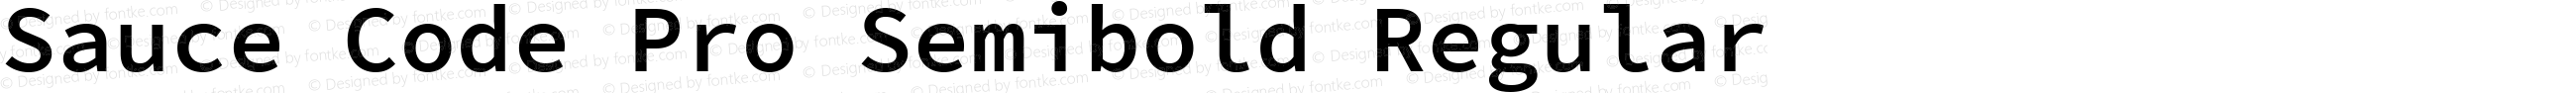 Sauce Code Pro Semibold Nerd Font Plus Font Awesome Mono